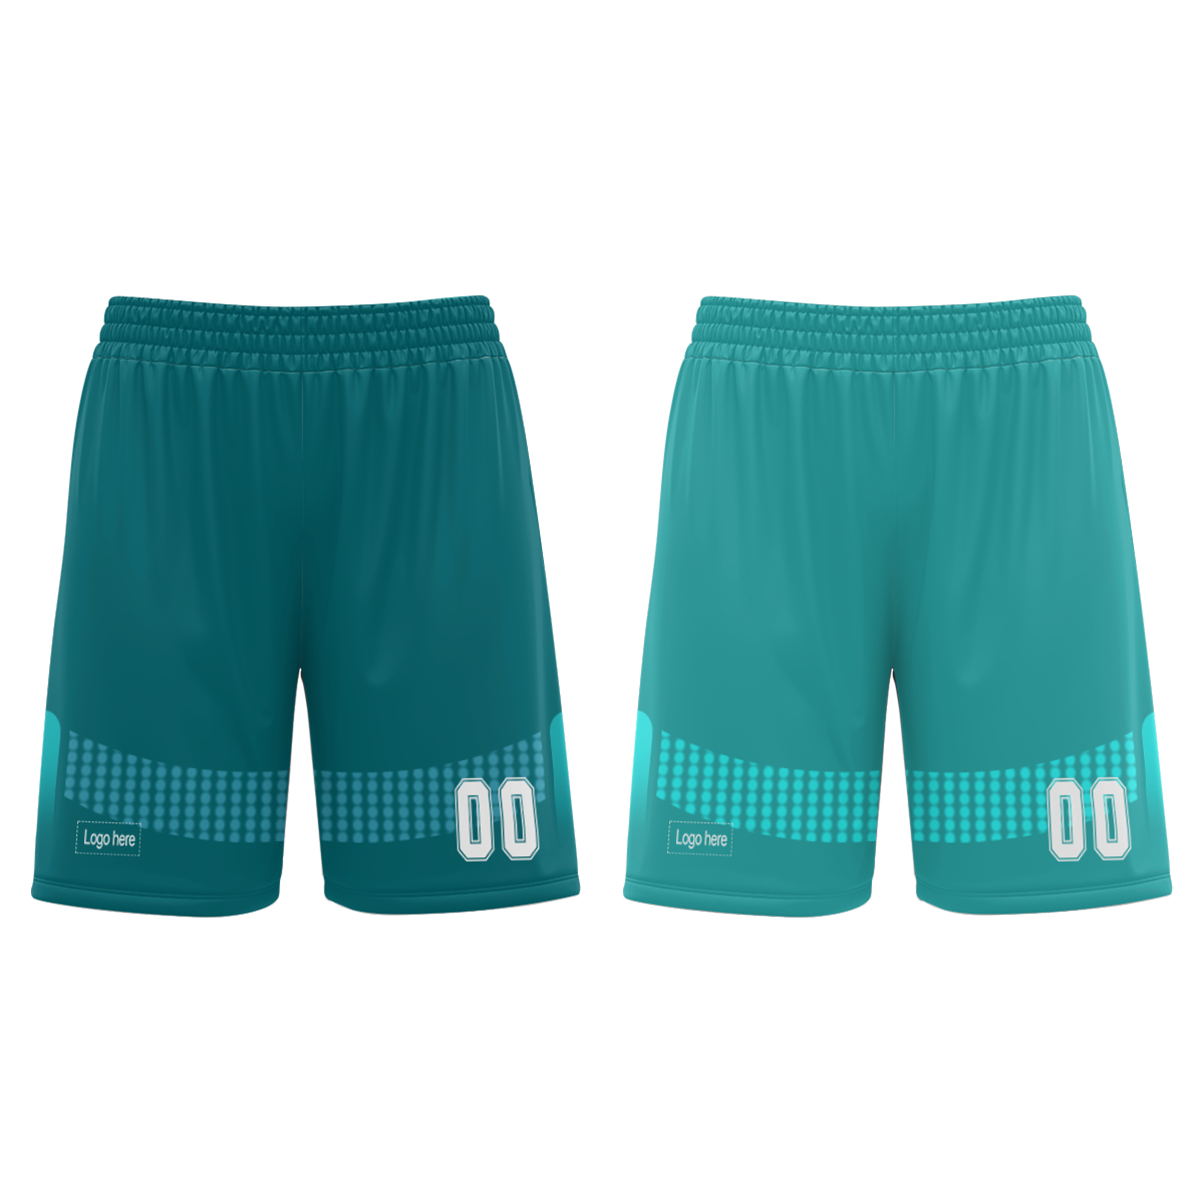 wholesale-professional-factory-sportswear-custom-print-on-demand-reversible-basketball-jersey-at-cj-pod-7